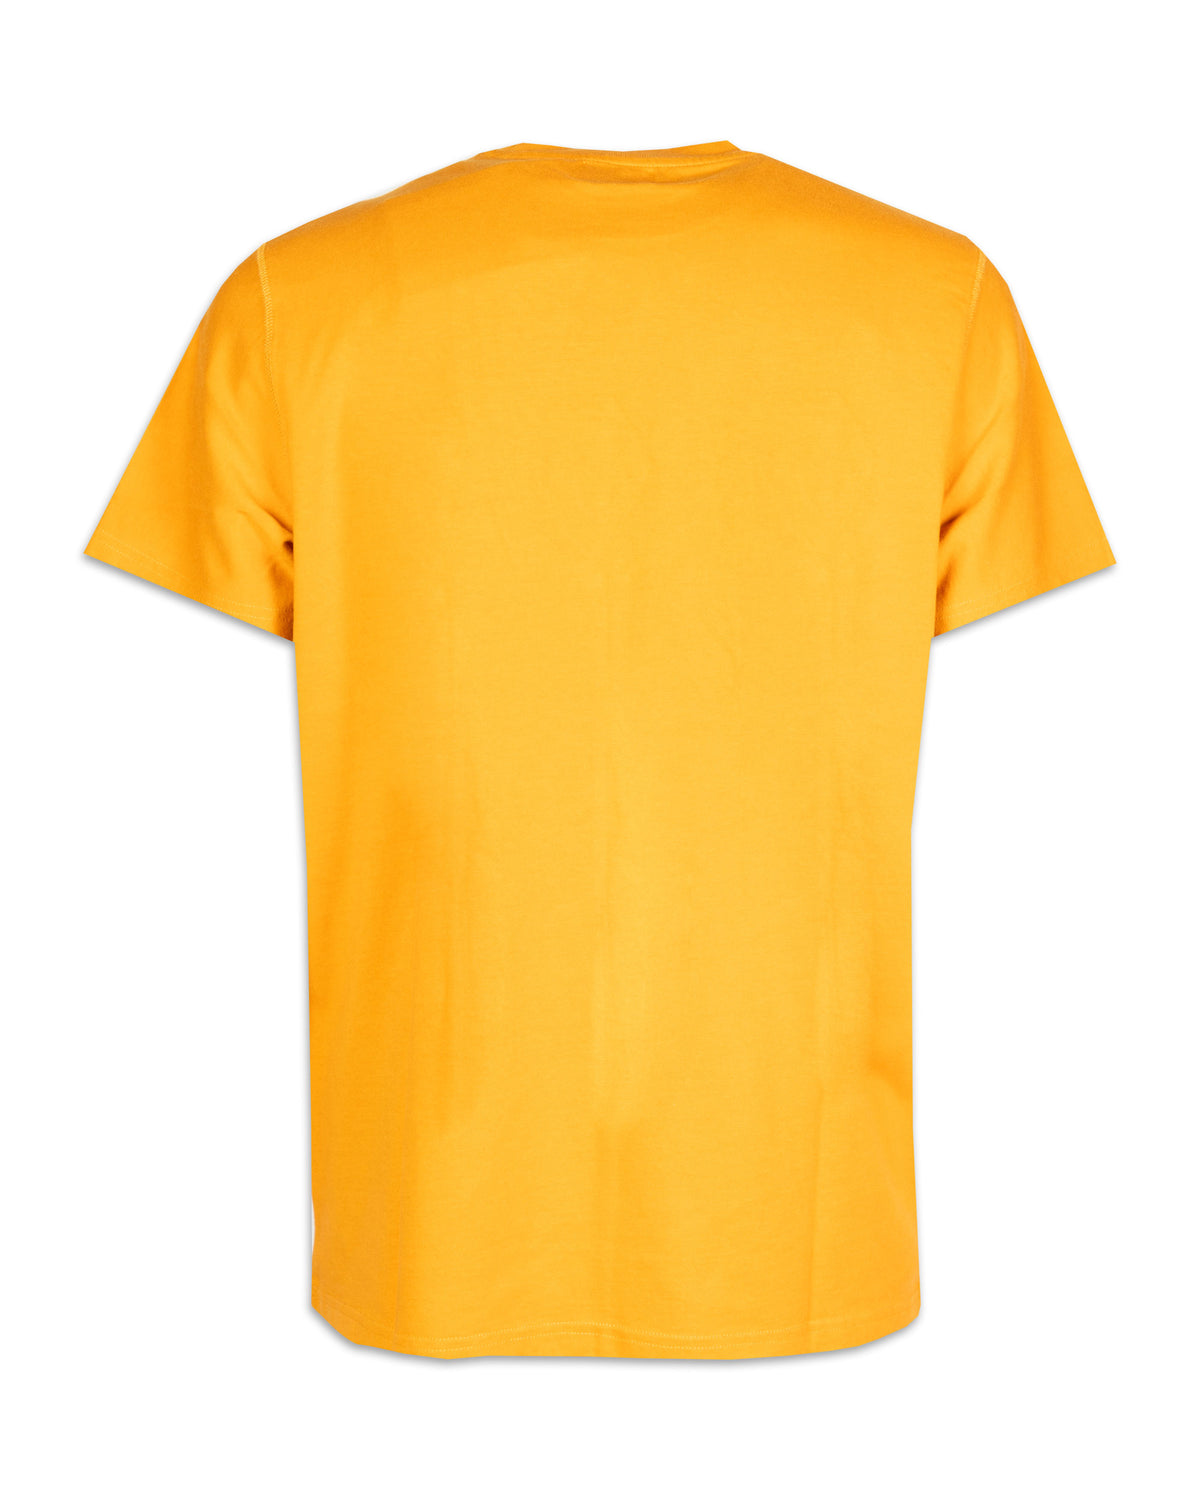 T-Shirt Uomo Arte Antwerp 3D Front Bauhaus Logo Arancio